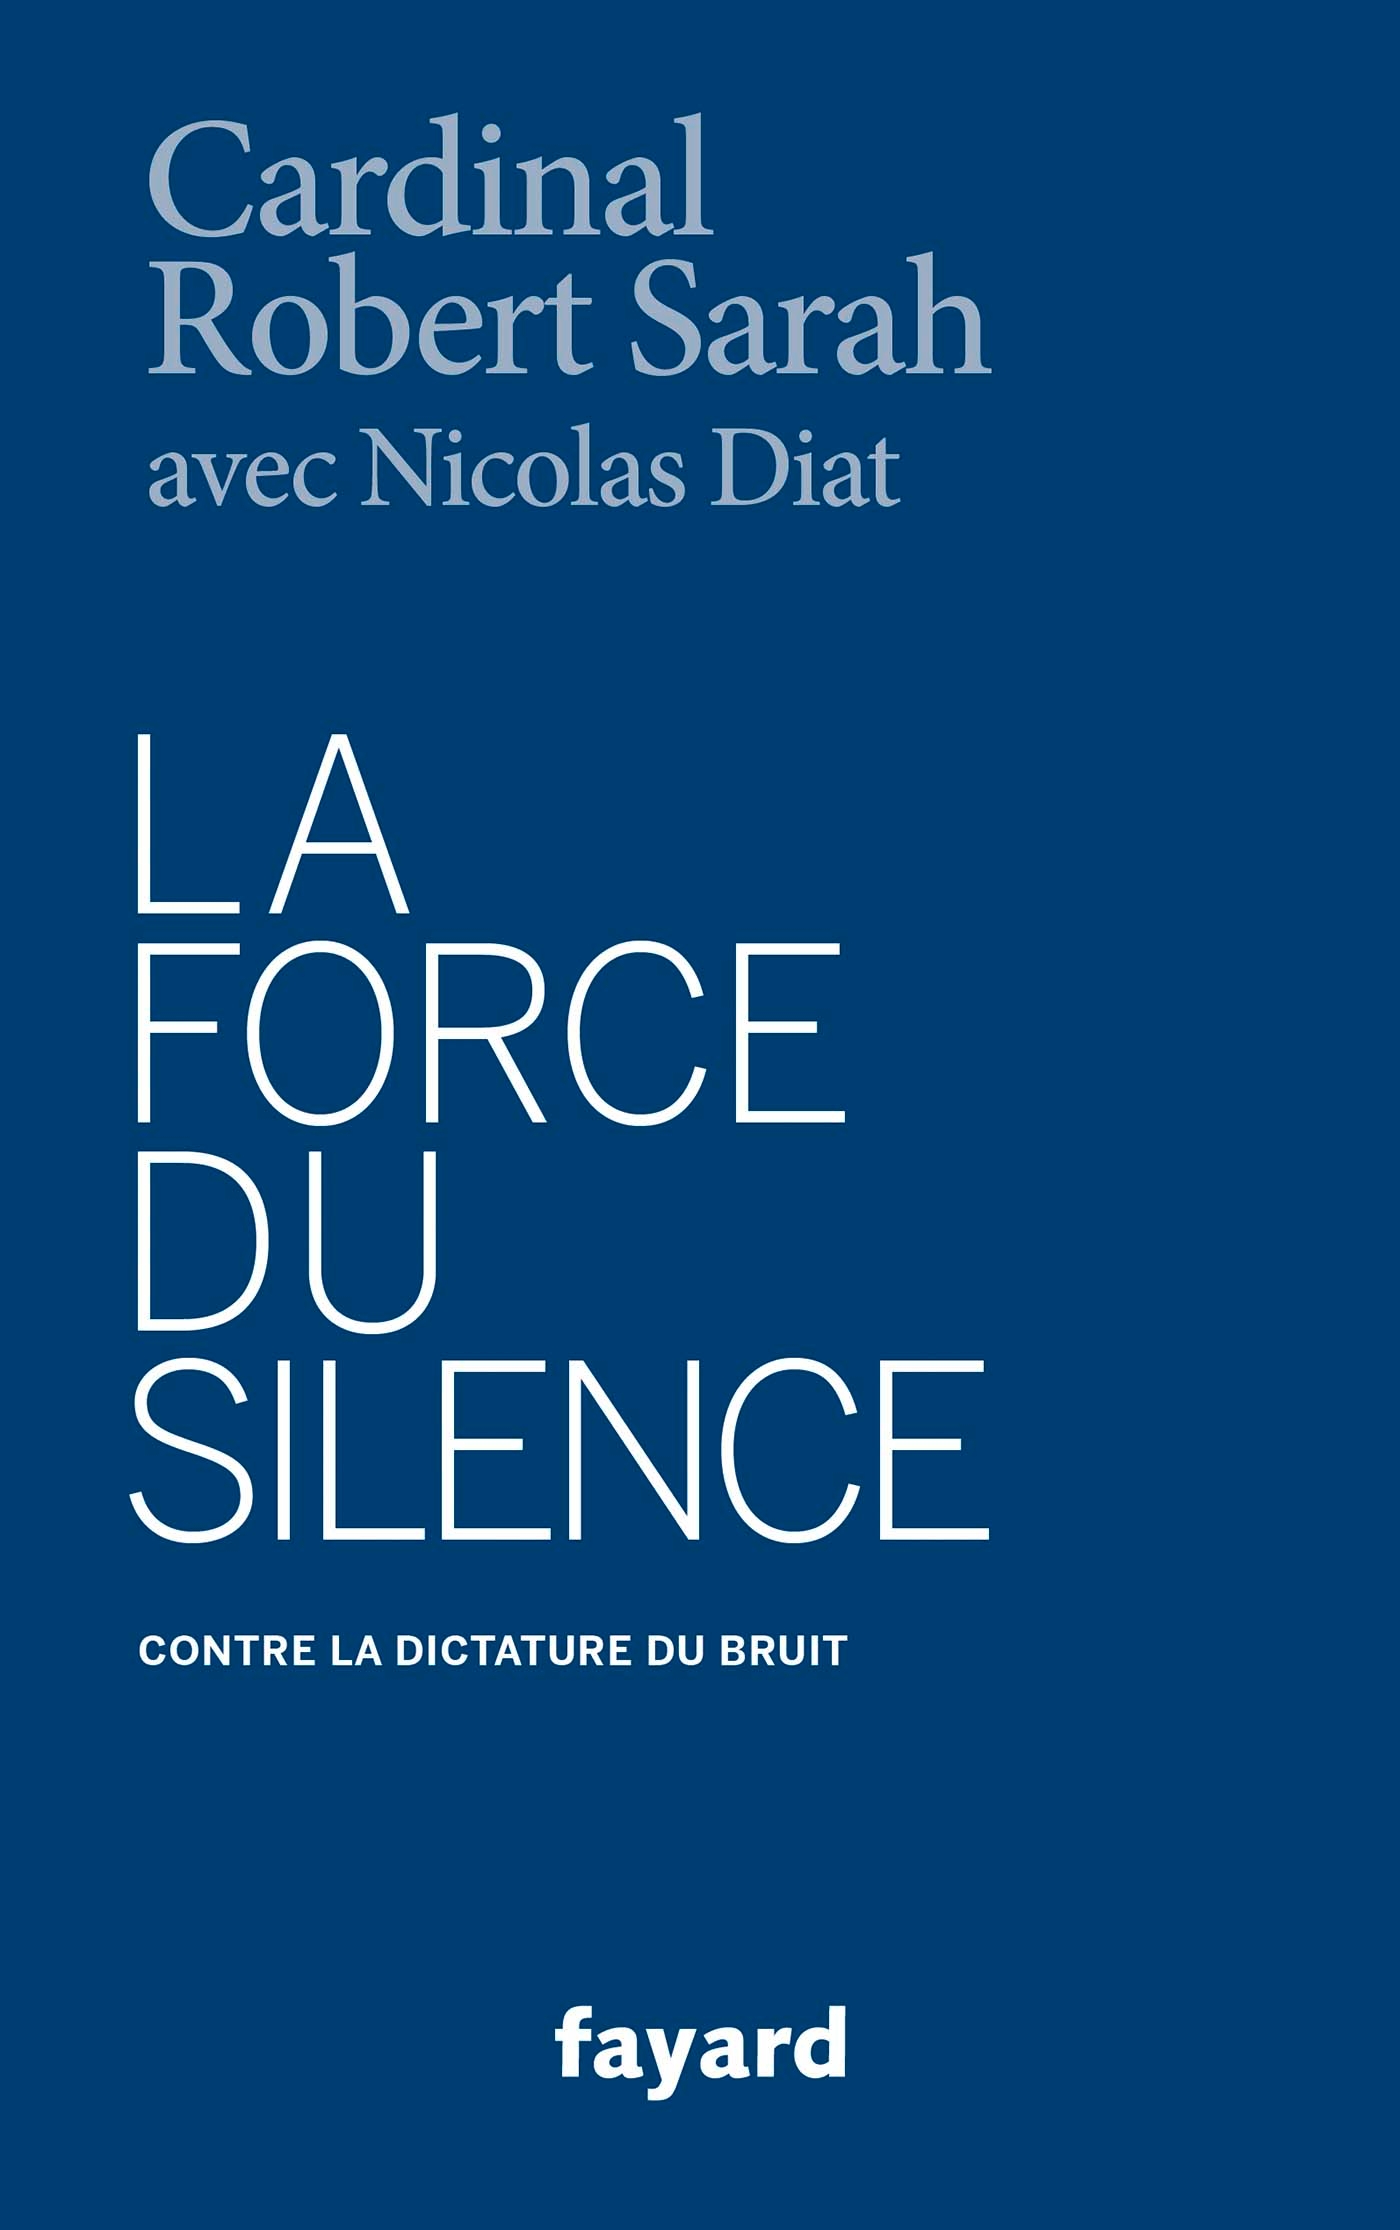 La force du silence © Éditions Fayard